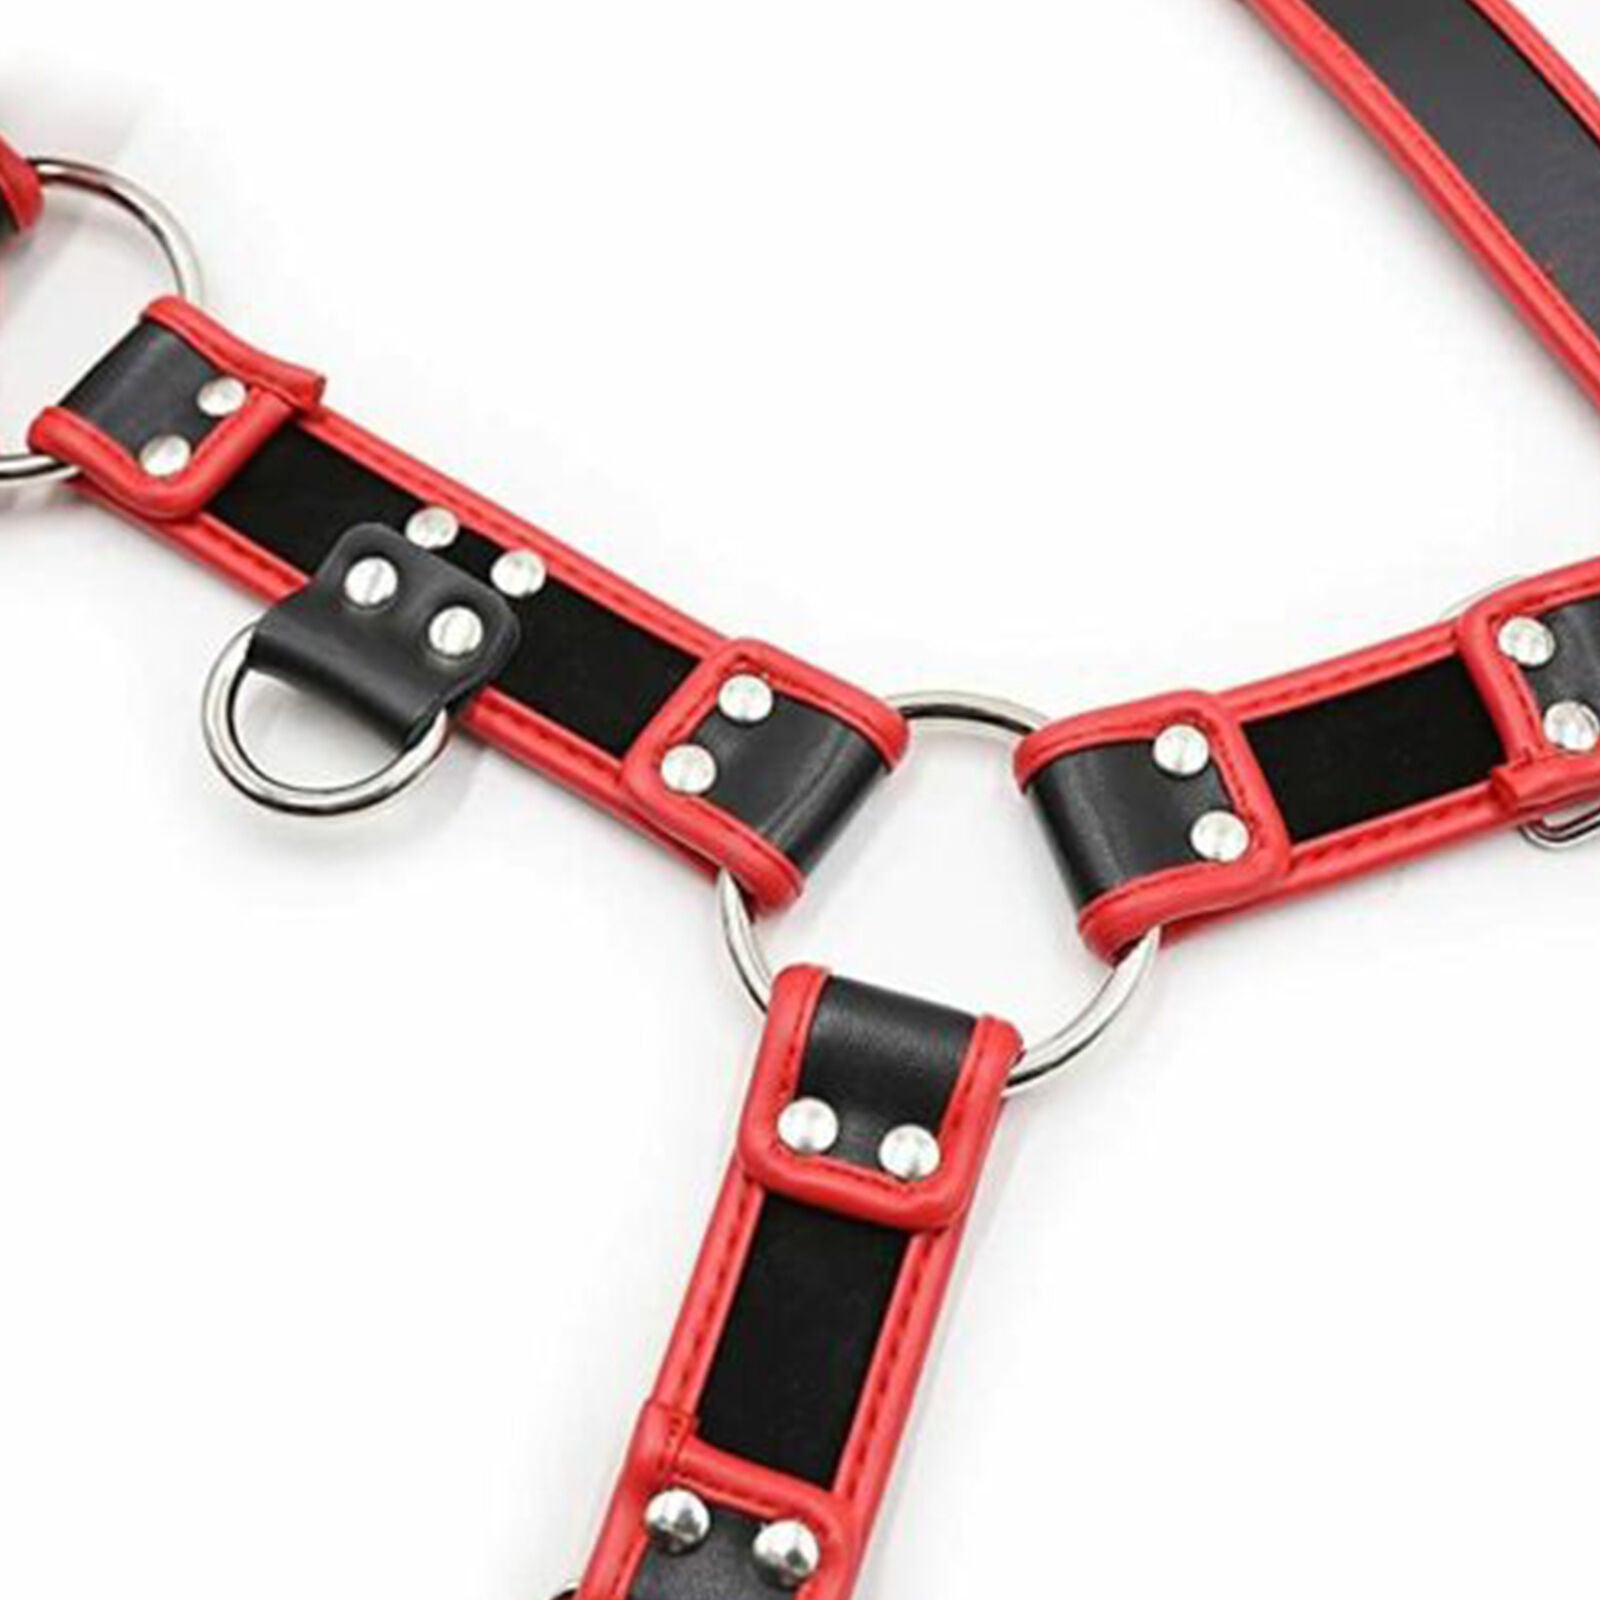 Leather Chest Harness Men Adjustable Bondage Cage Harness Belts